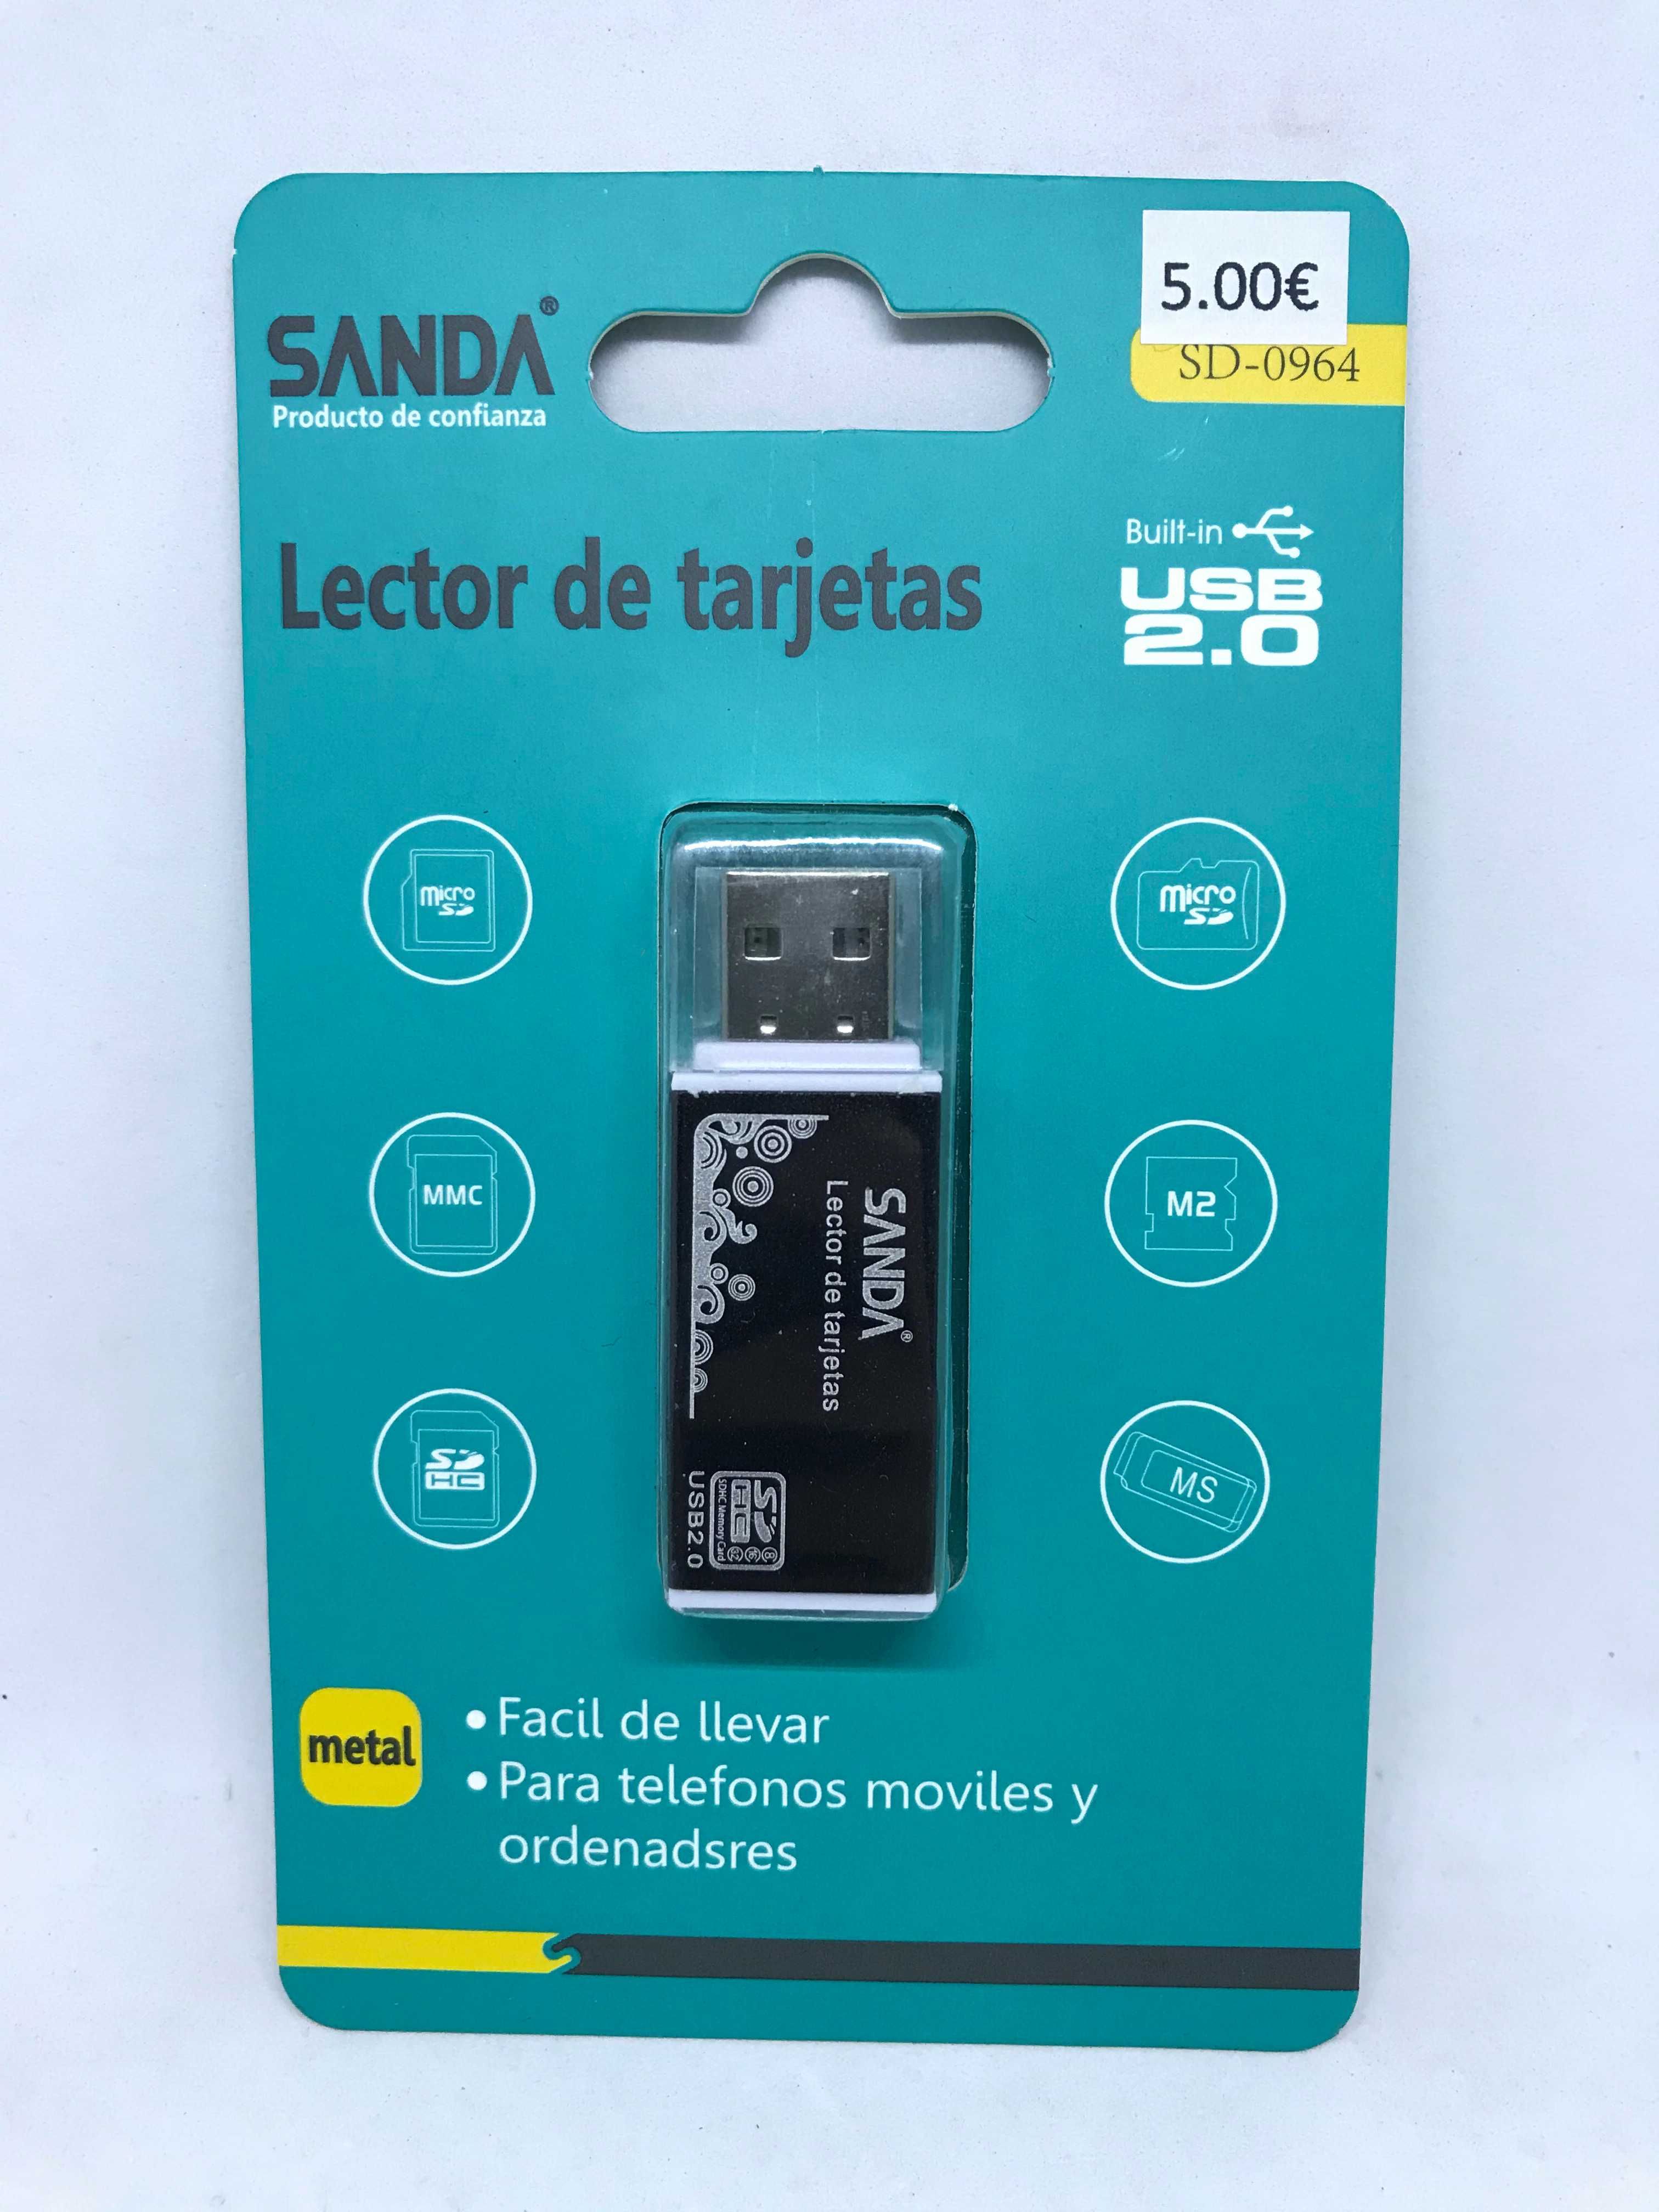 Mini Pen USB leitor de múltiplos cartões de memória (Micro SD/MS/etc)